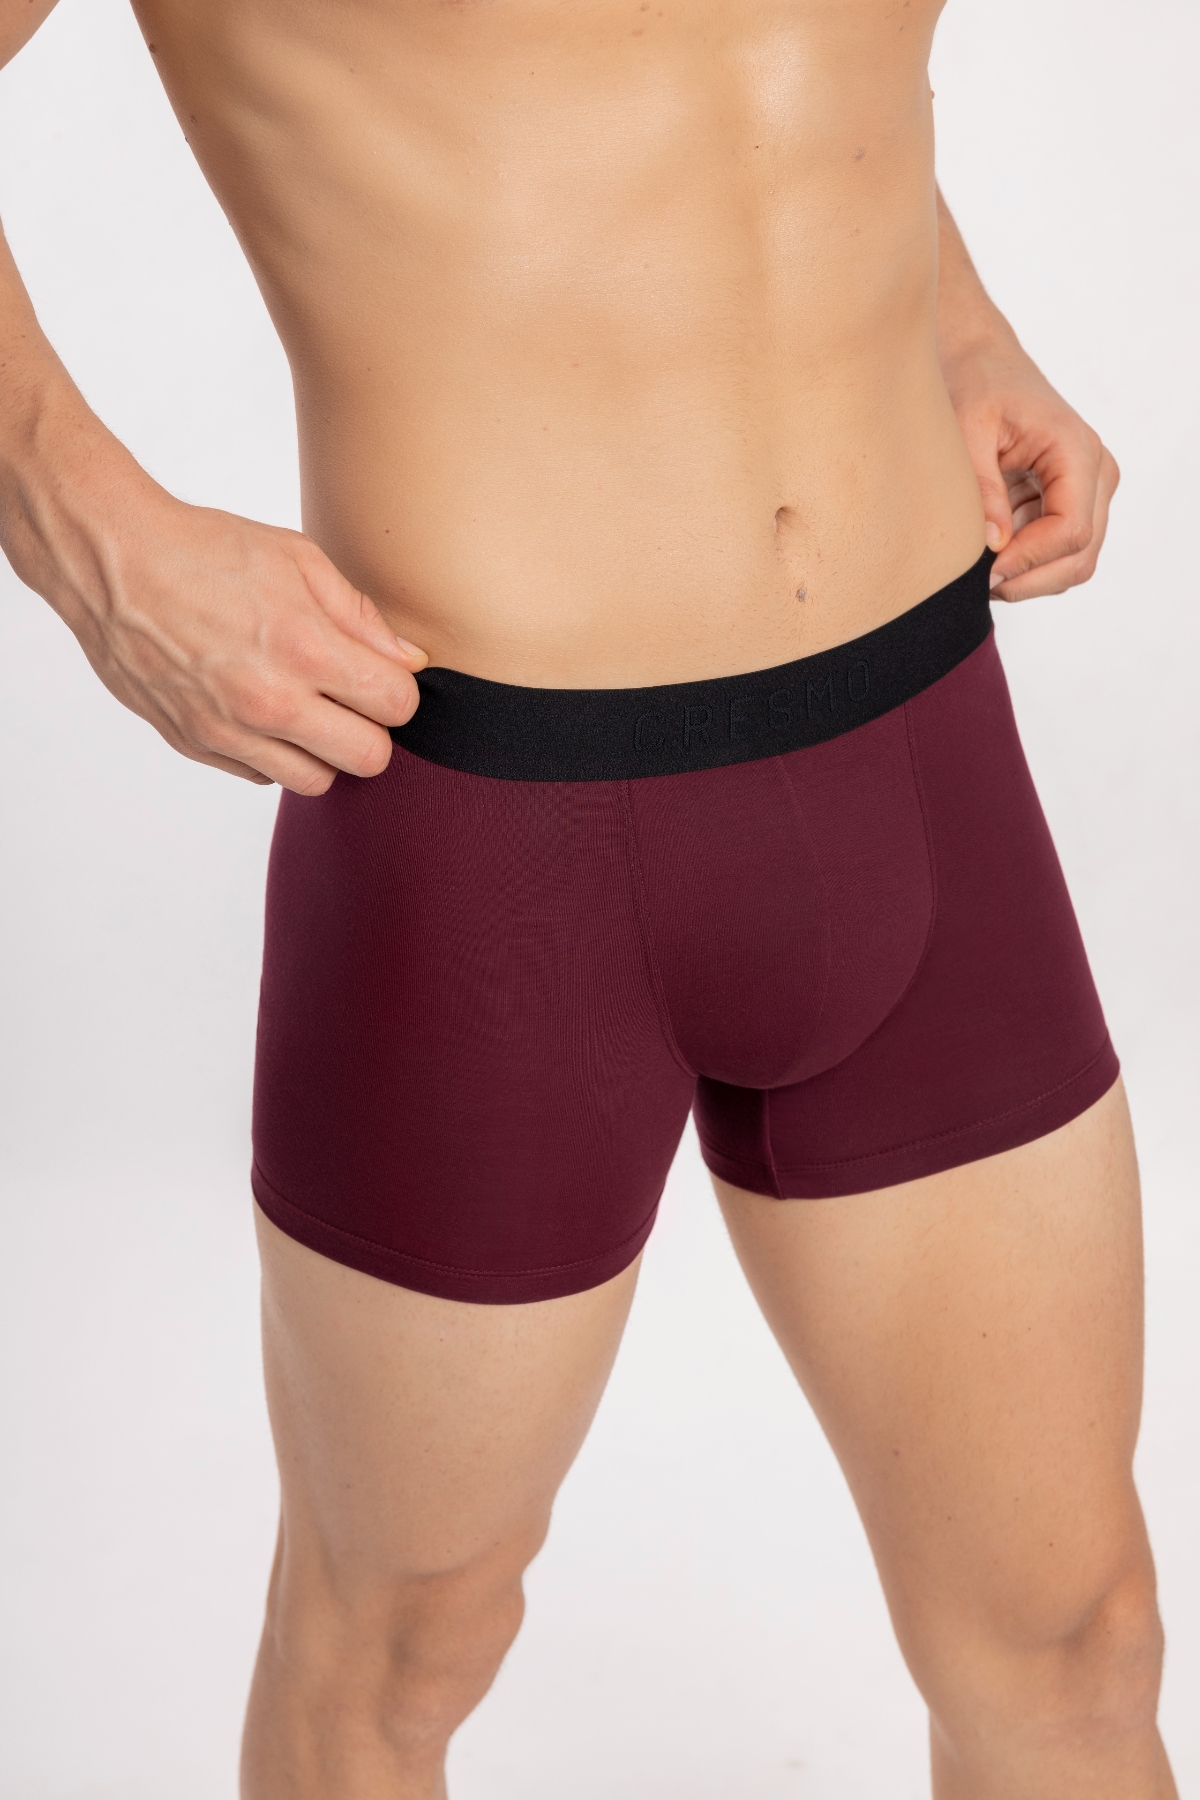 CRESMO Men's Anti-Microbial Micro Modal Underwear Breathable Ultra Soft Trunk